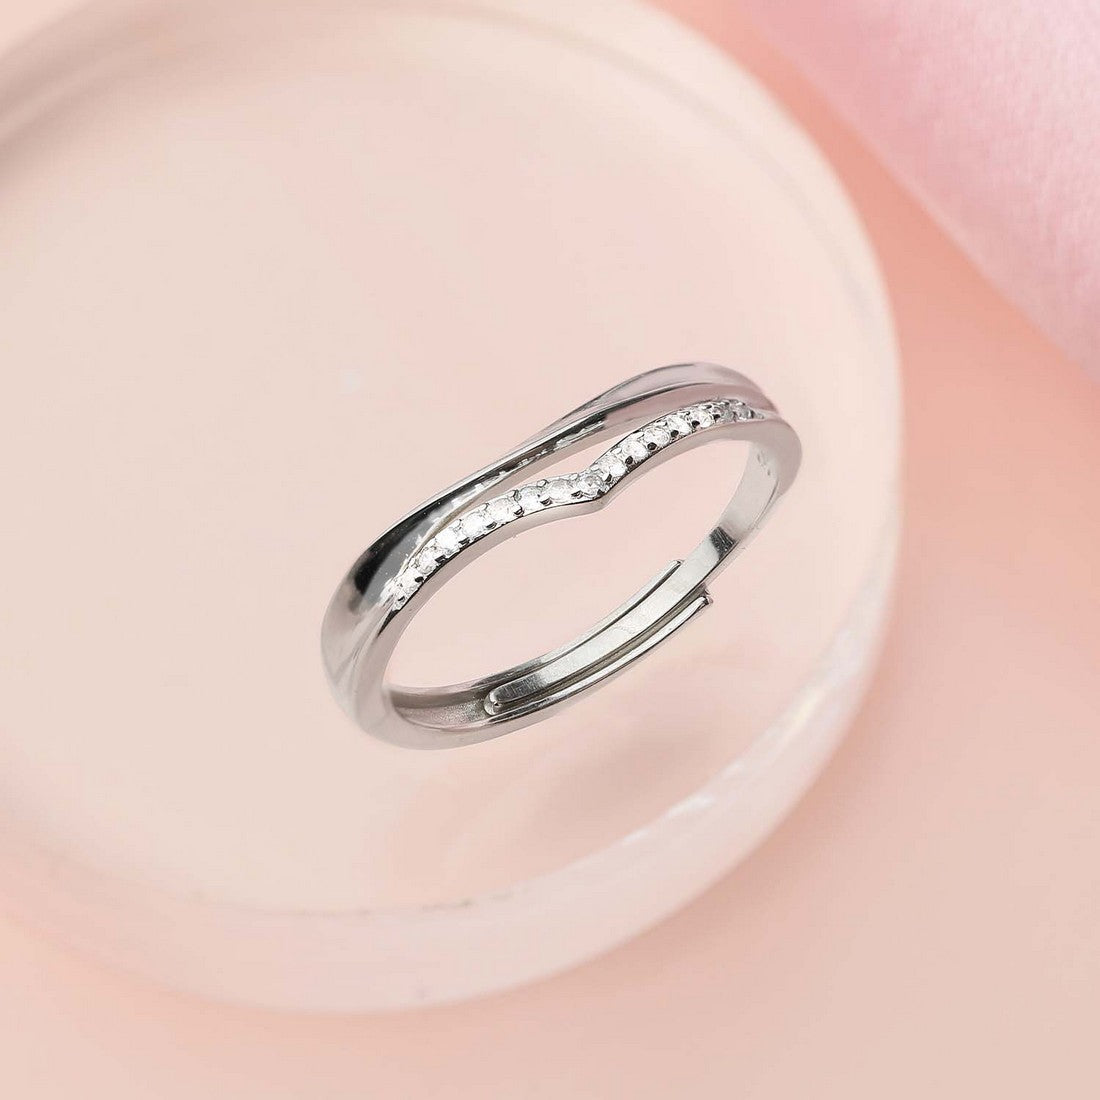 The Minimalist 925 Silver Ring (Adjustable)